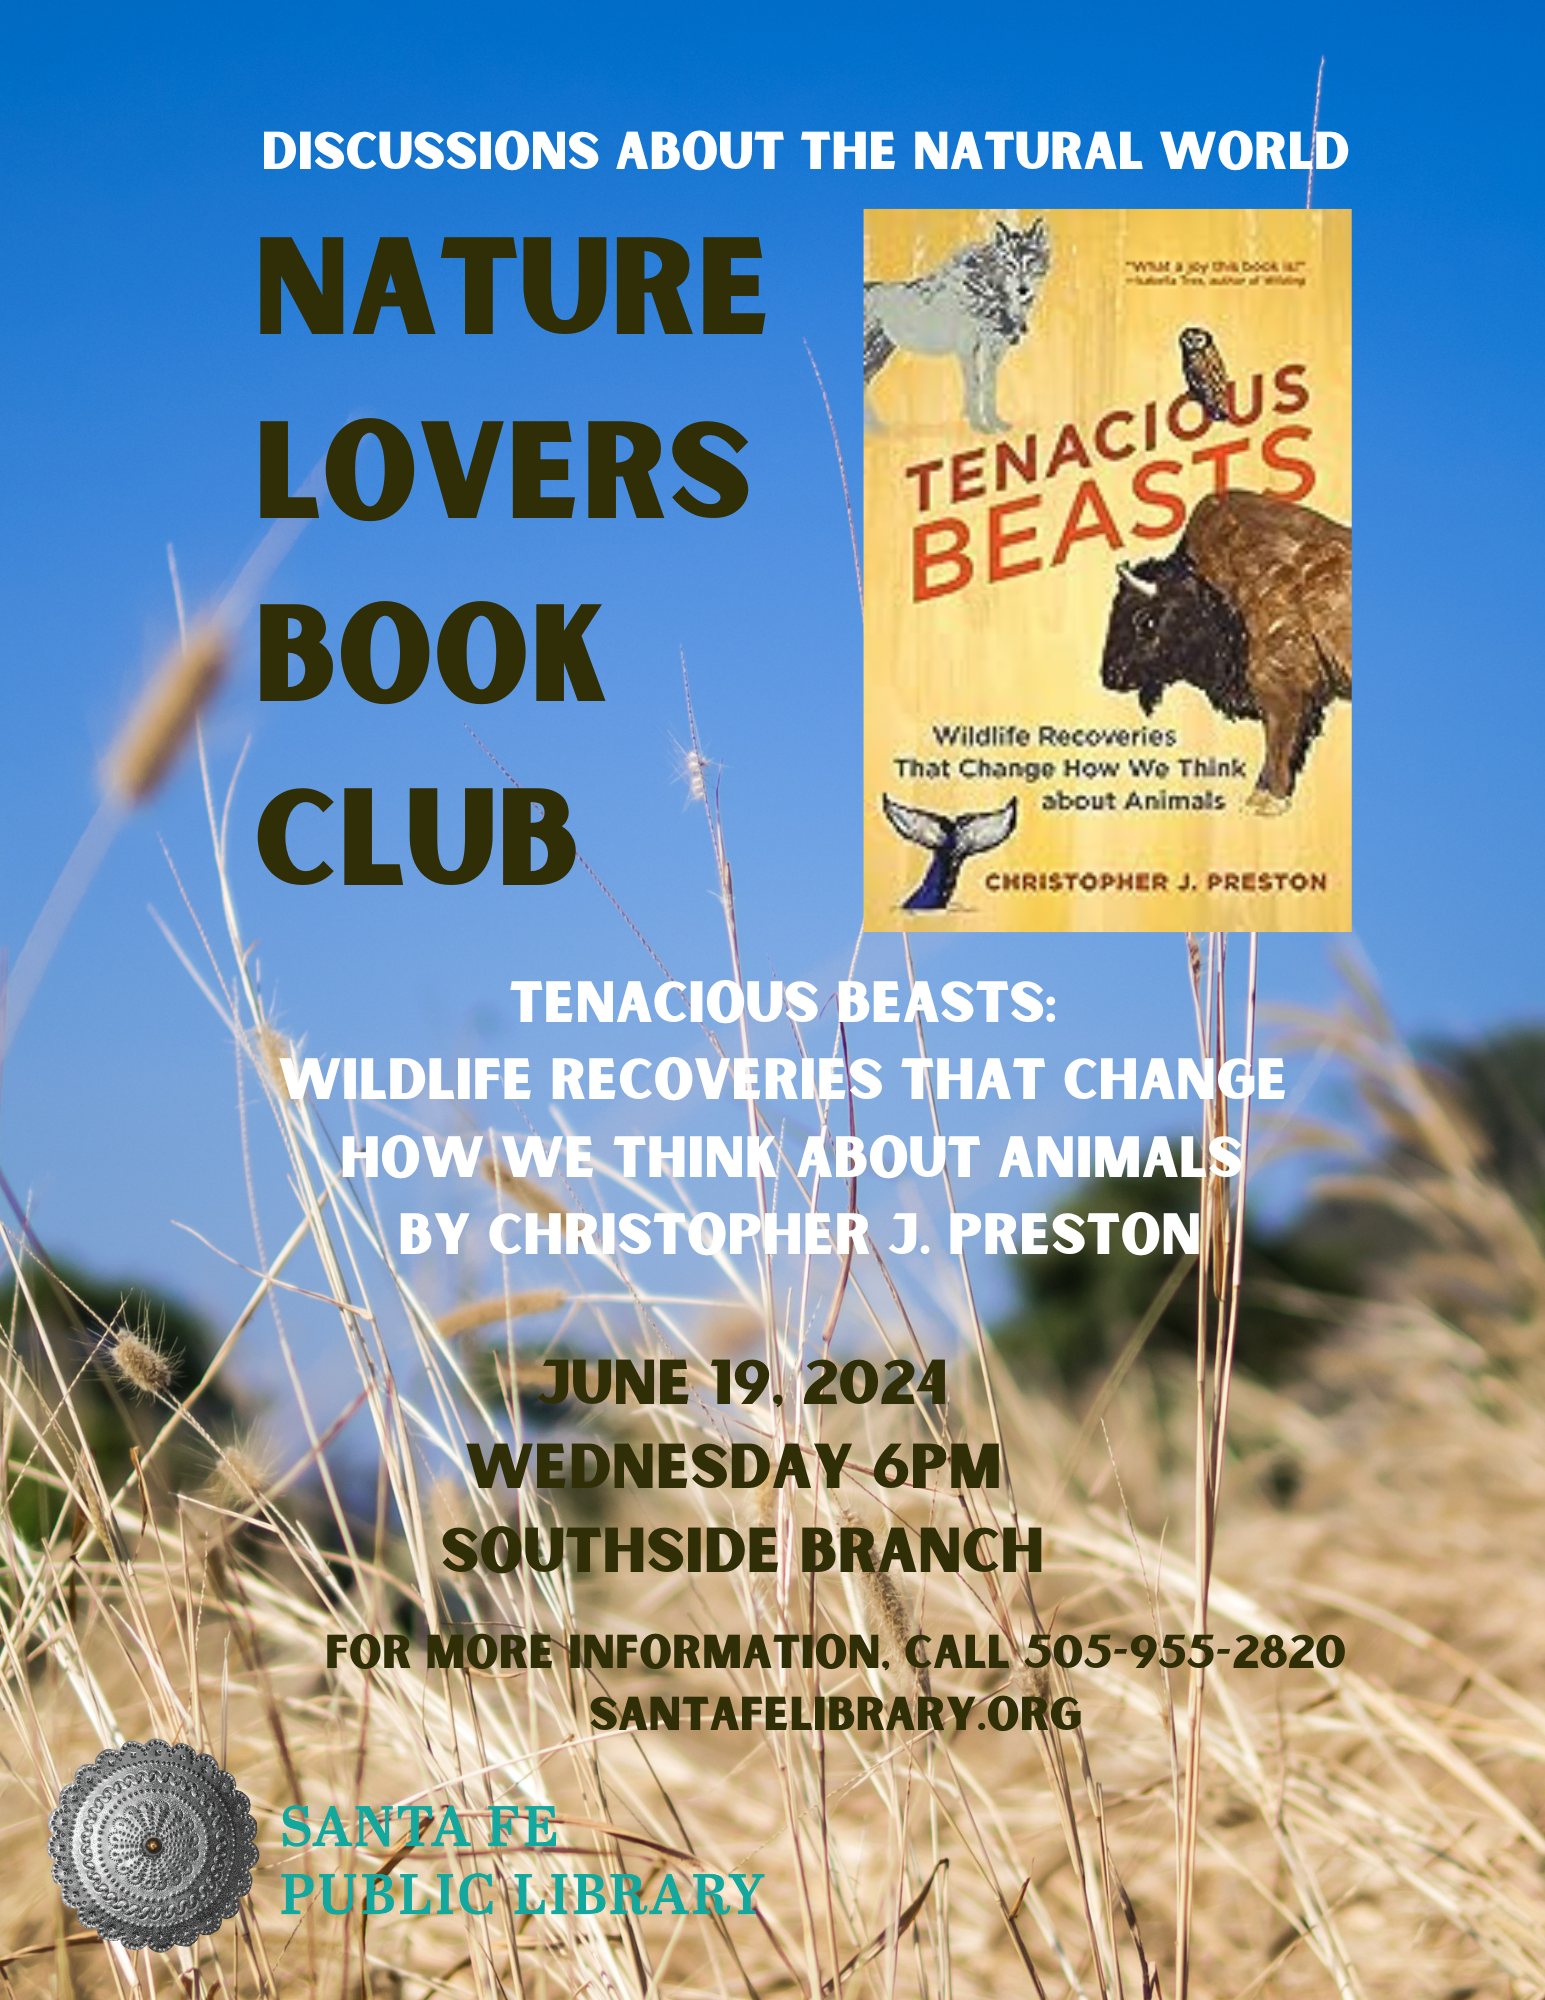 Nature Lovers Book Club discusses Tenacious Beasts